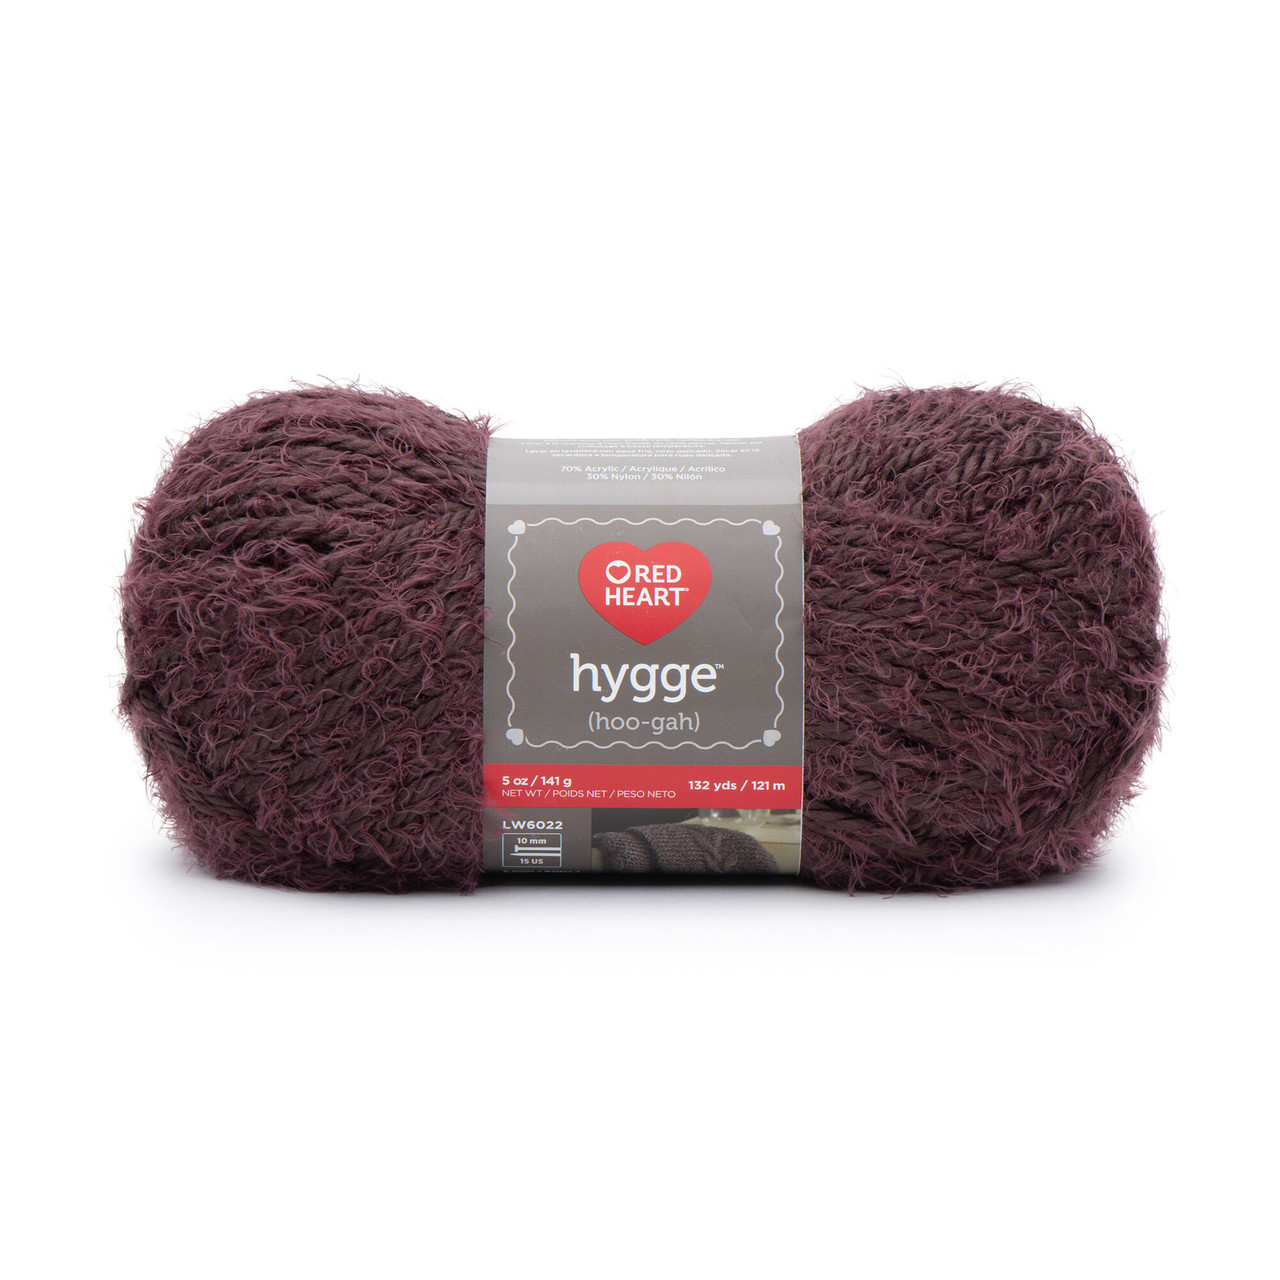 Red Heart Hygge Plum Candy Knitting & Crochet Yarn